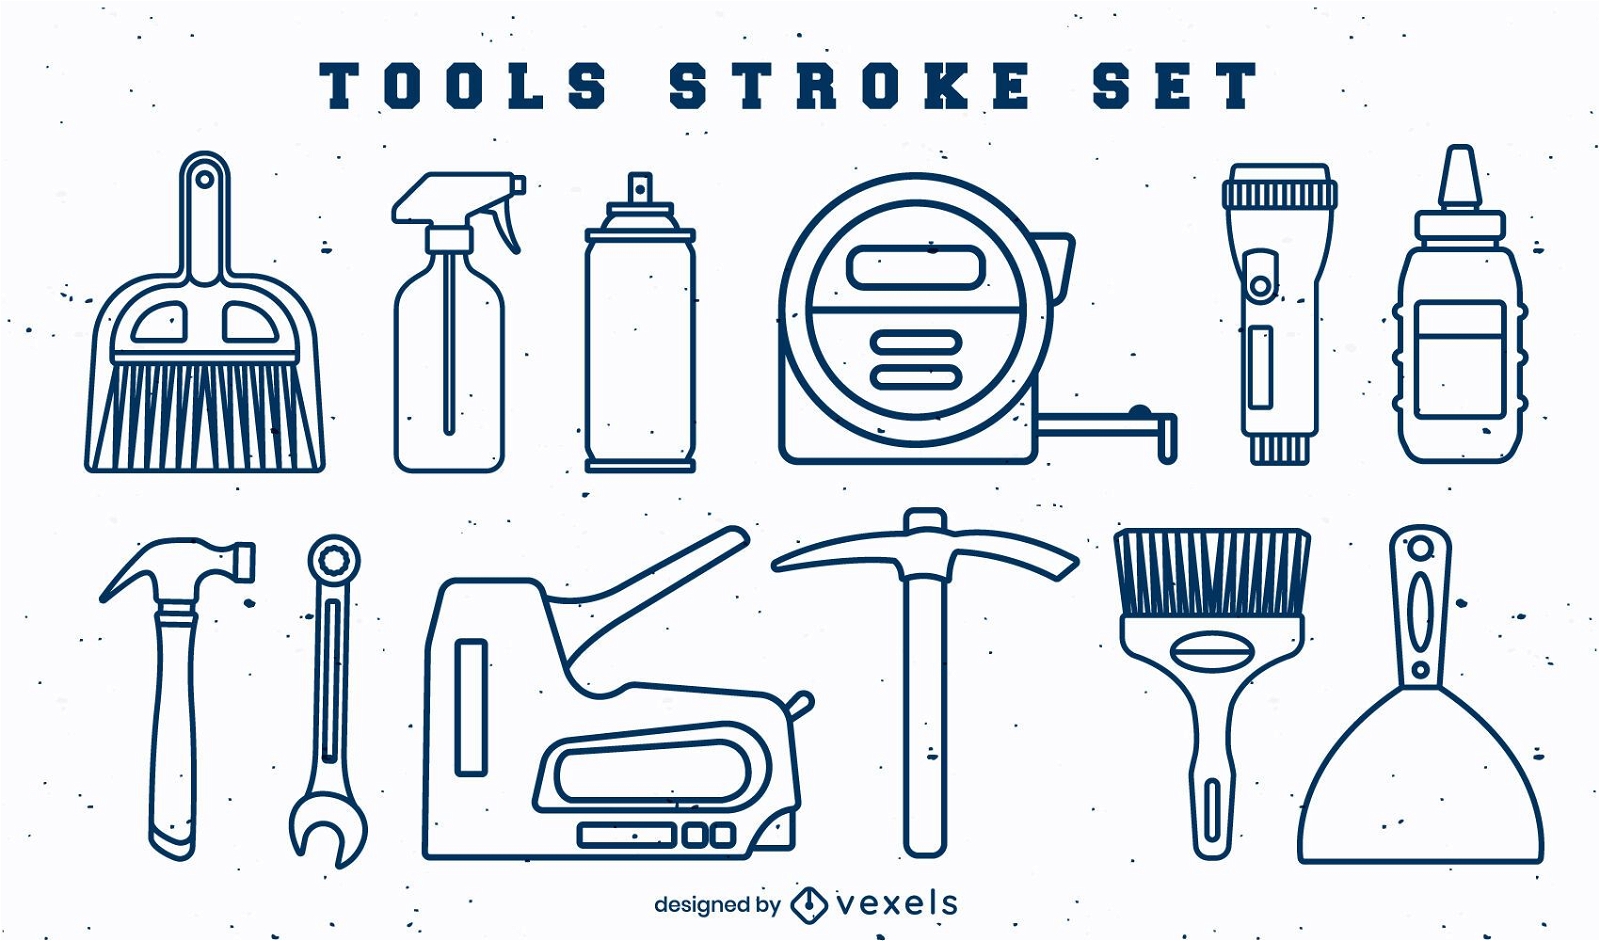 Garage tools stroke set of elements